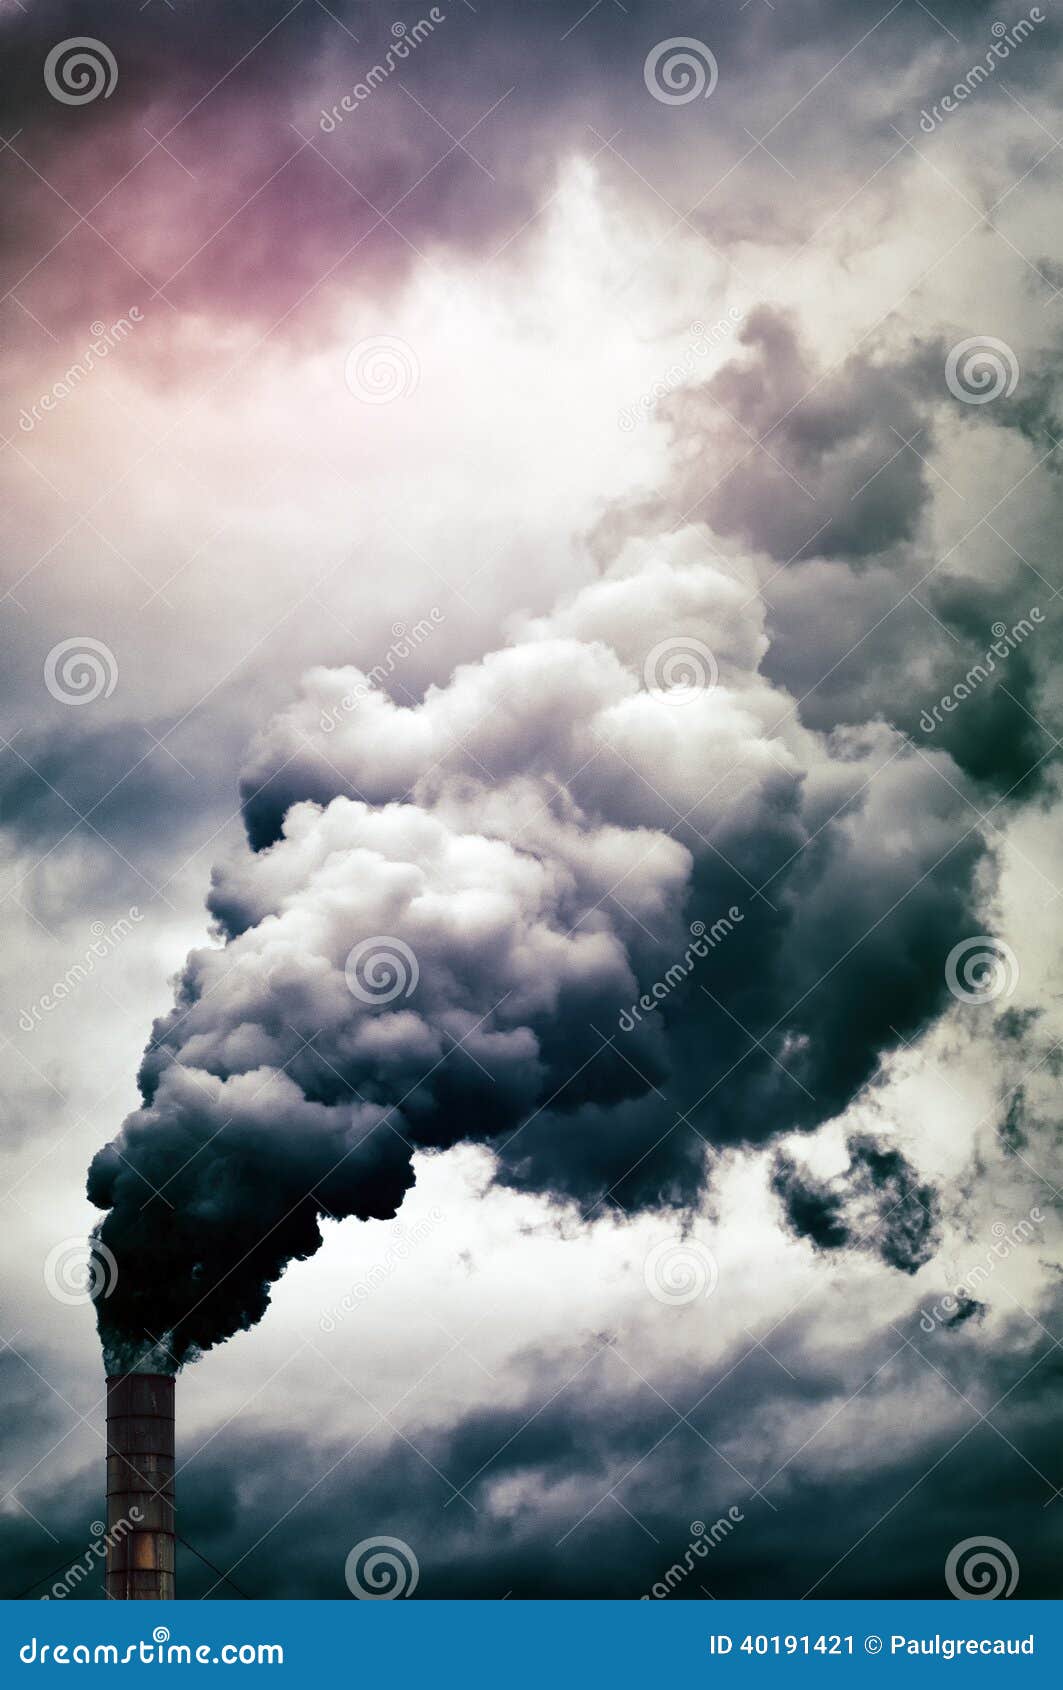 factory smoke emission